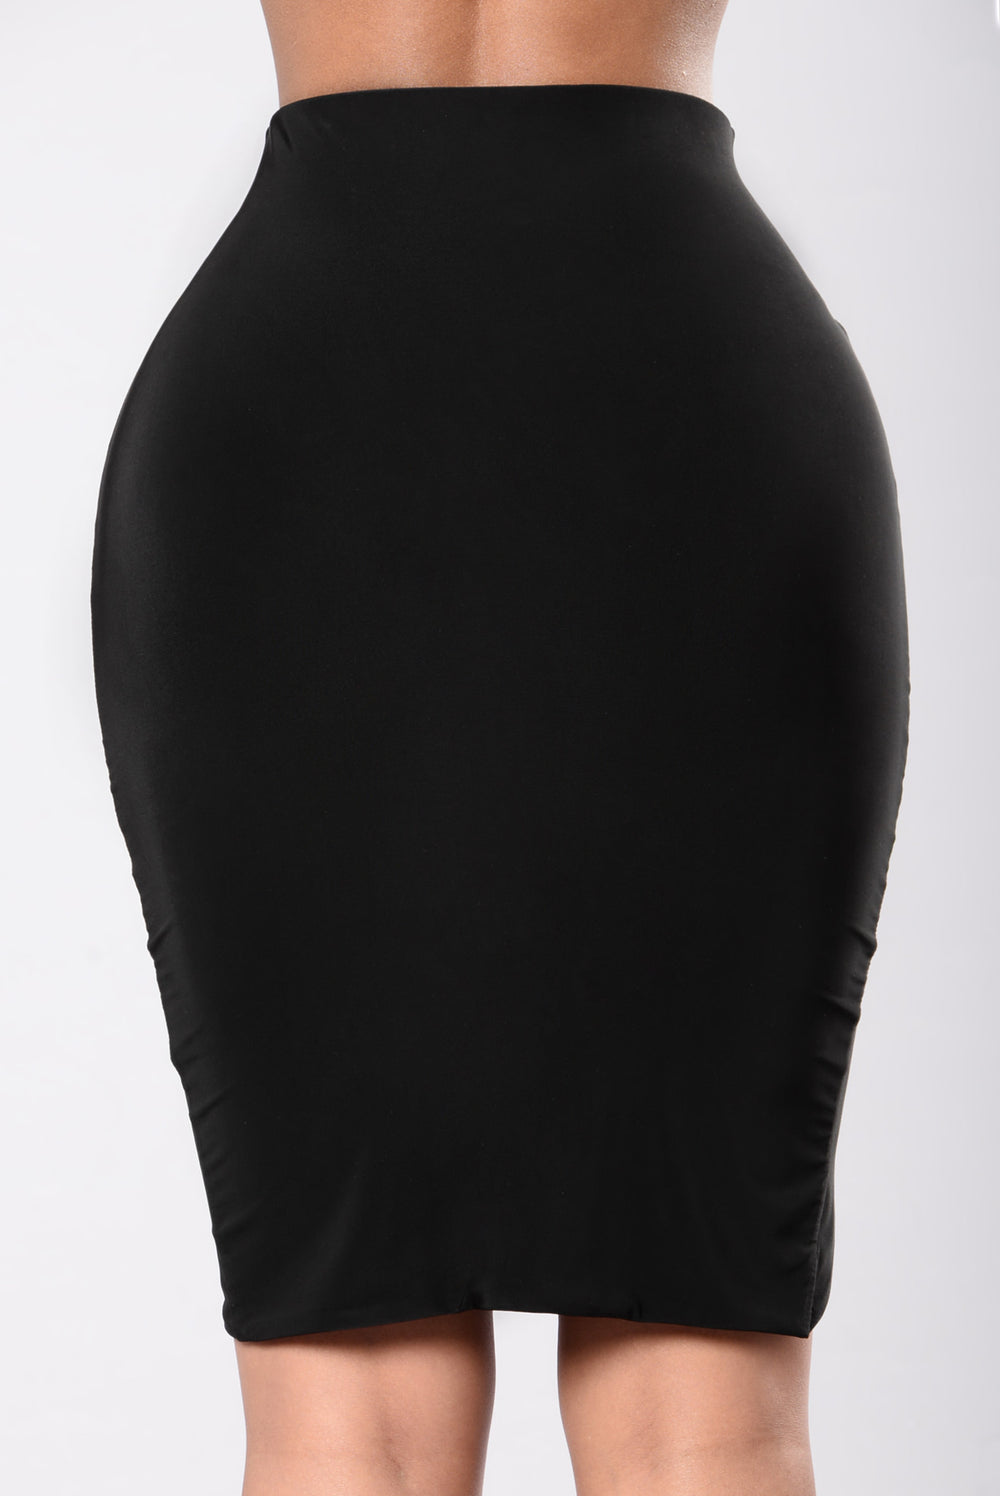 Standing Ovation Skirt - Black